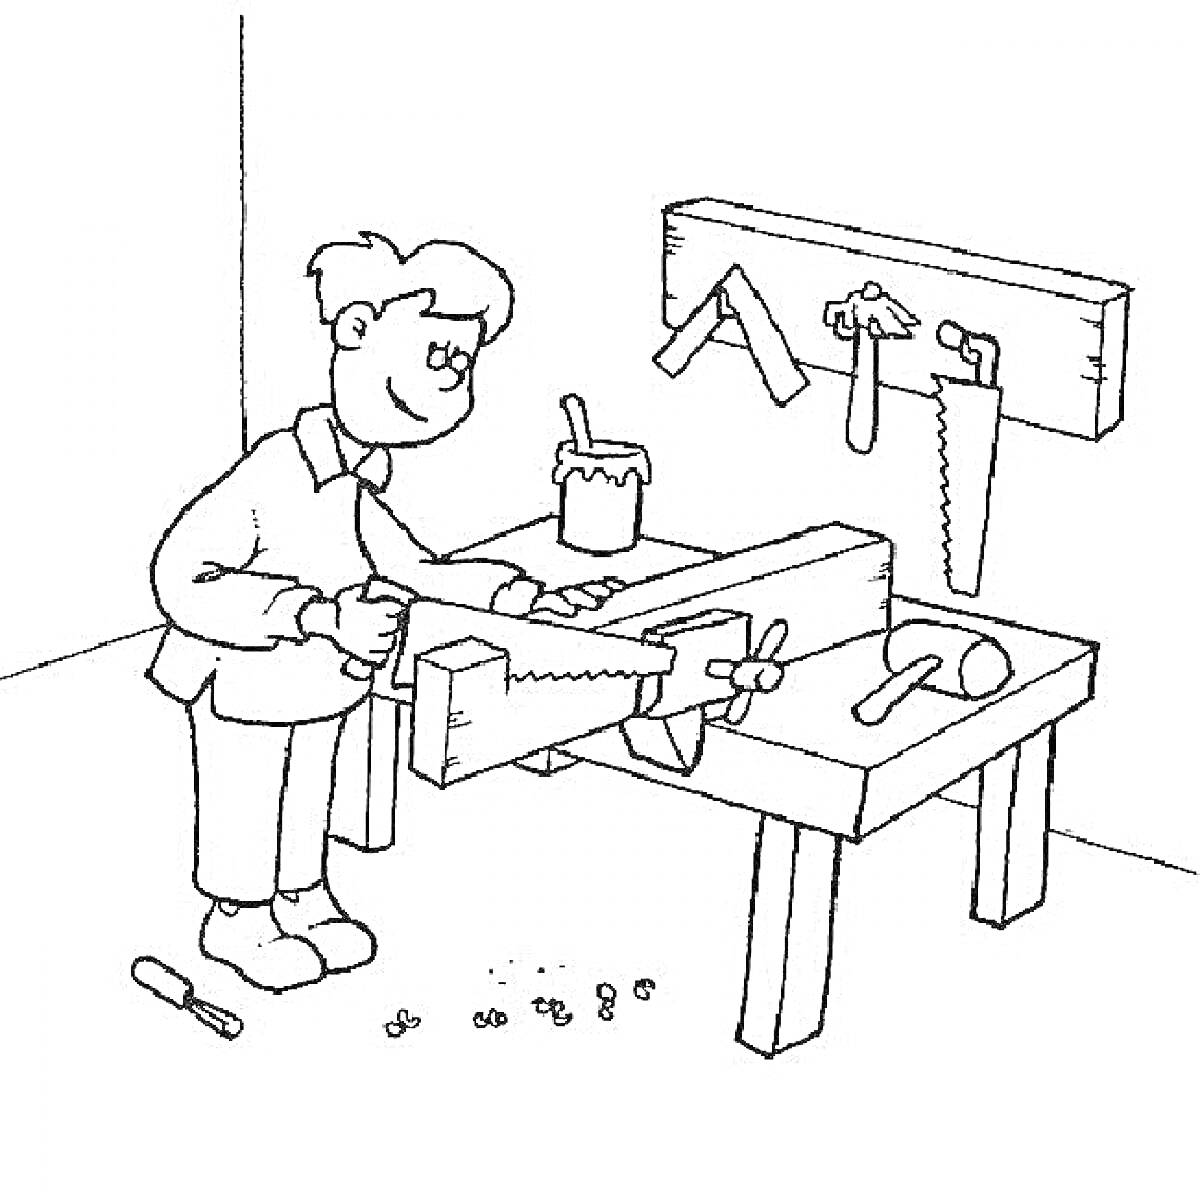 Плотник за рабочим столом с инструментами (пила, молоток, клещи, карандаш, струбцина и гвозди)